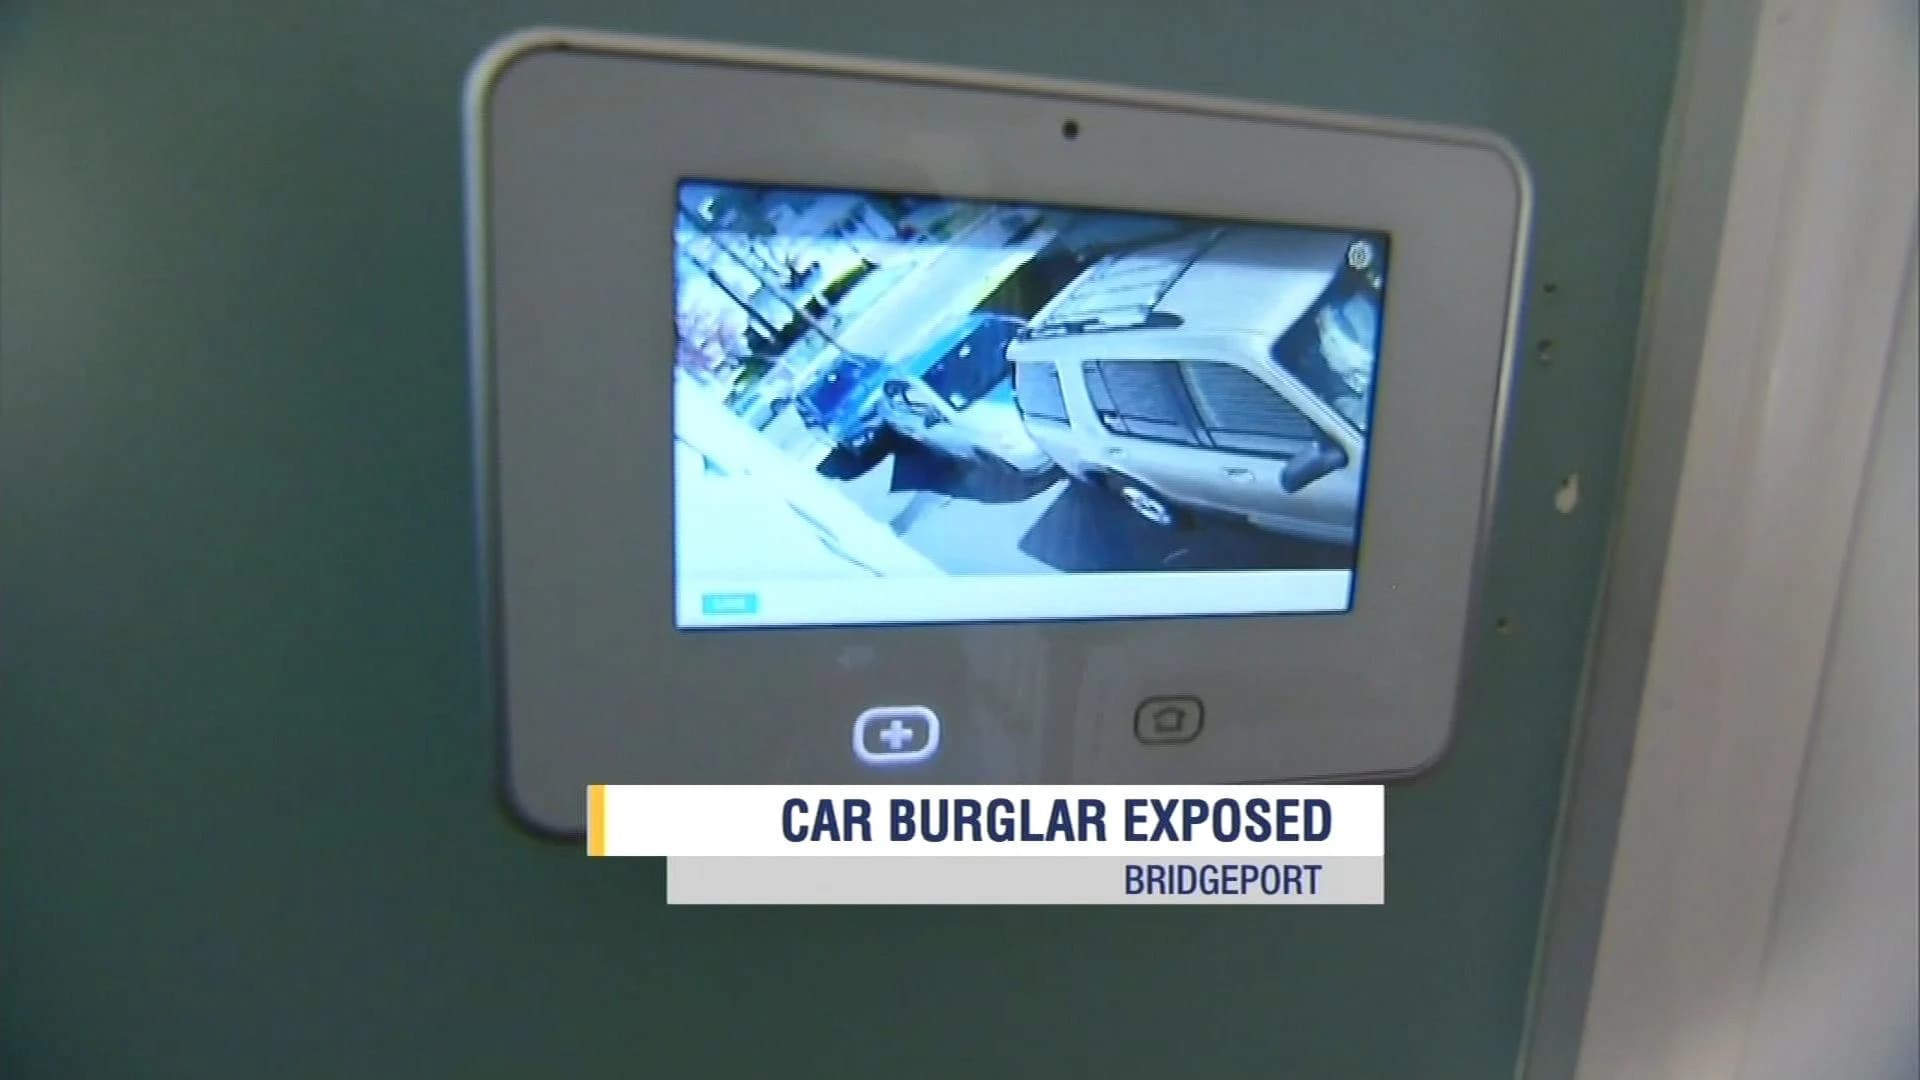 Police seek help finding car burglar in Bridgeport